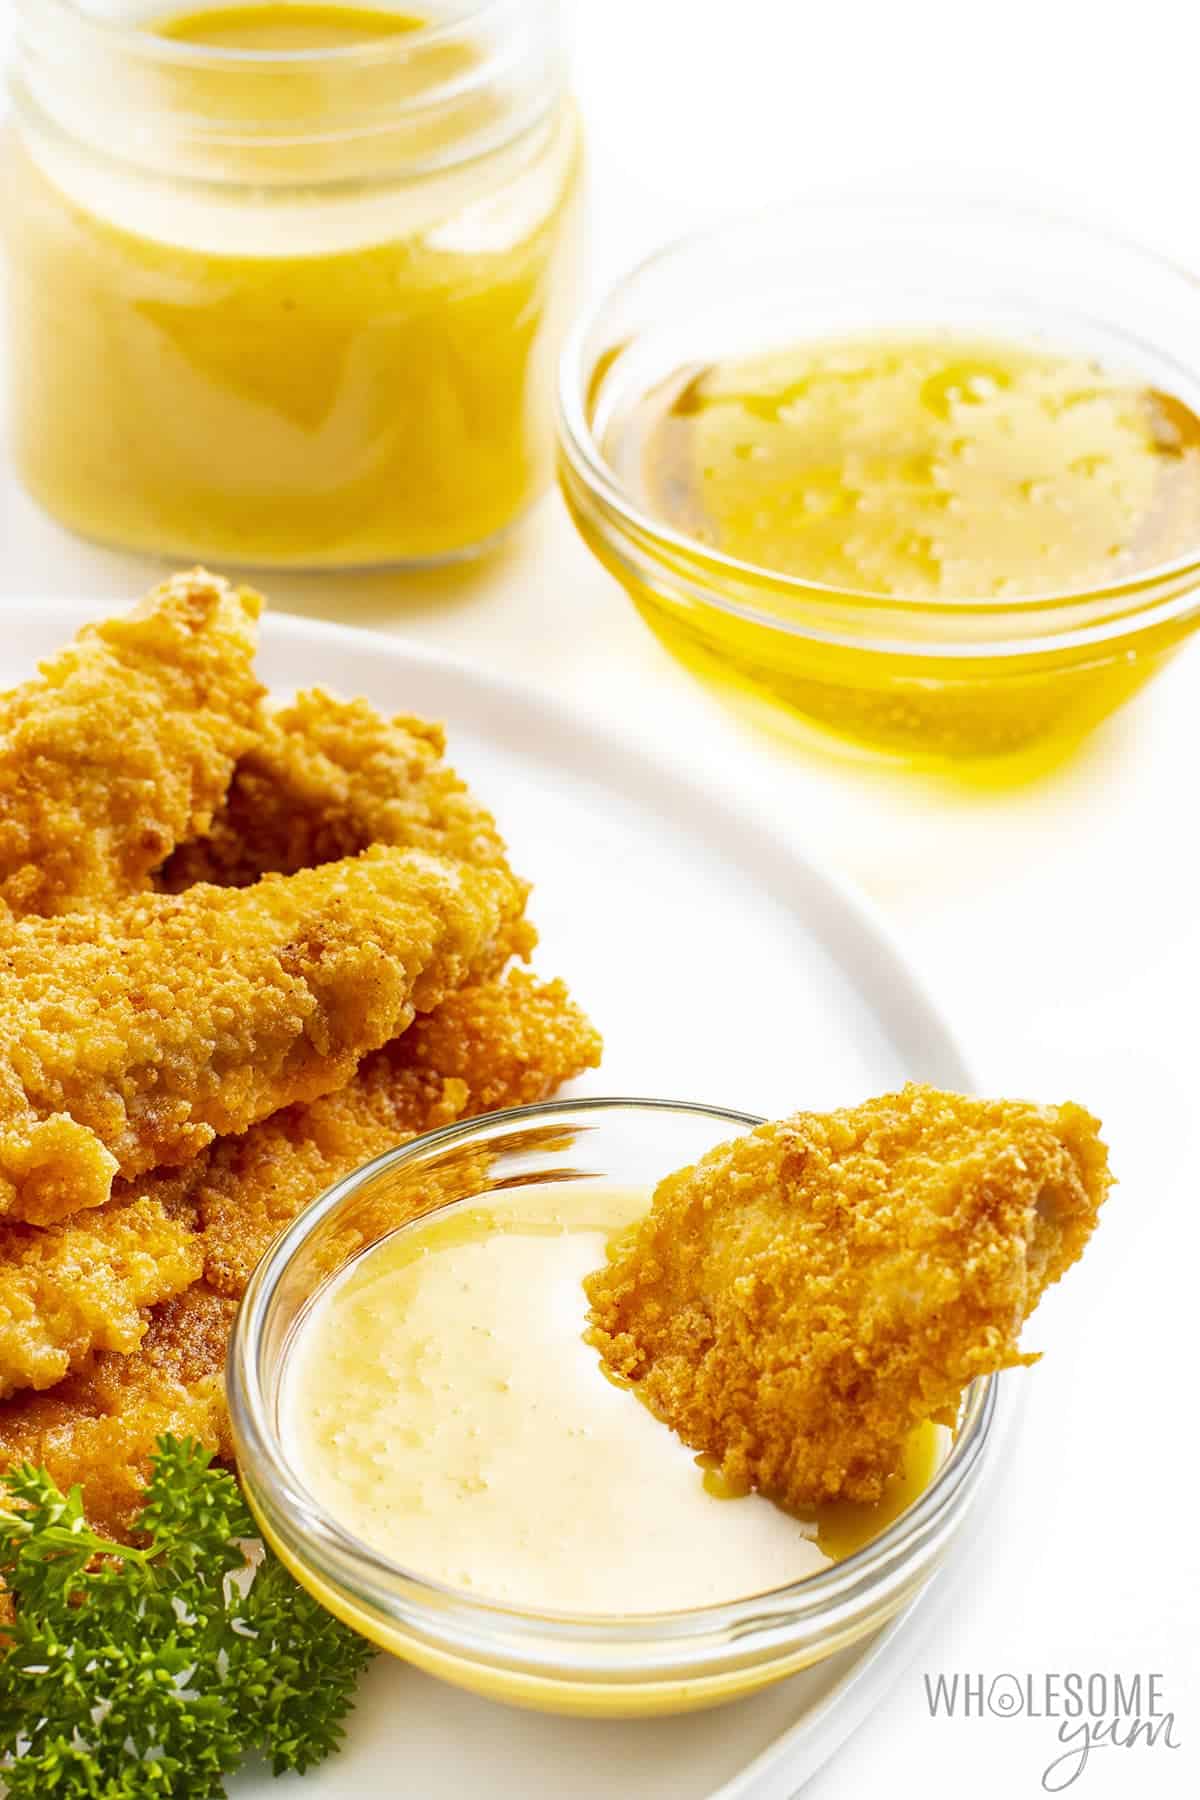 Sugar-free honey mustard plated with chicken strips.